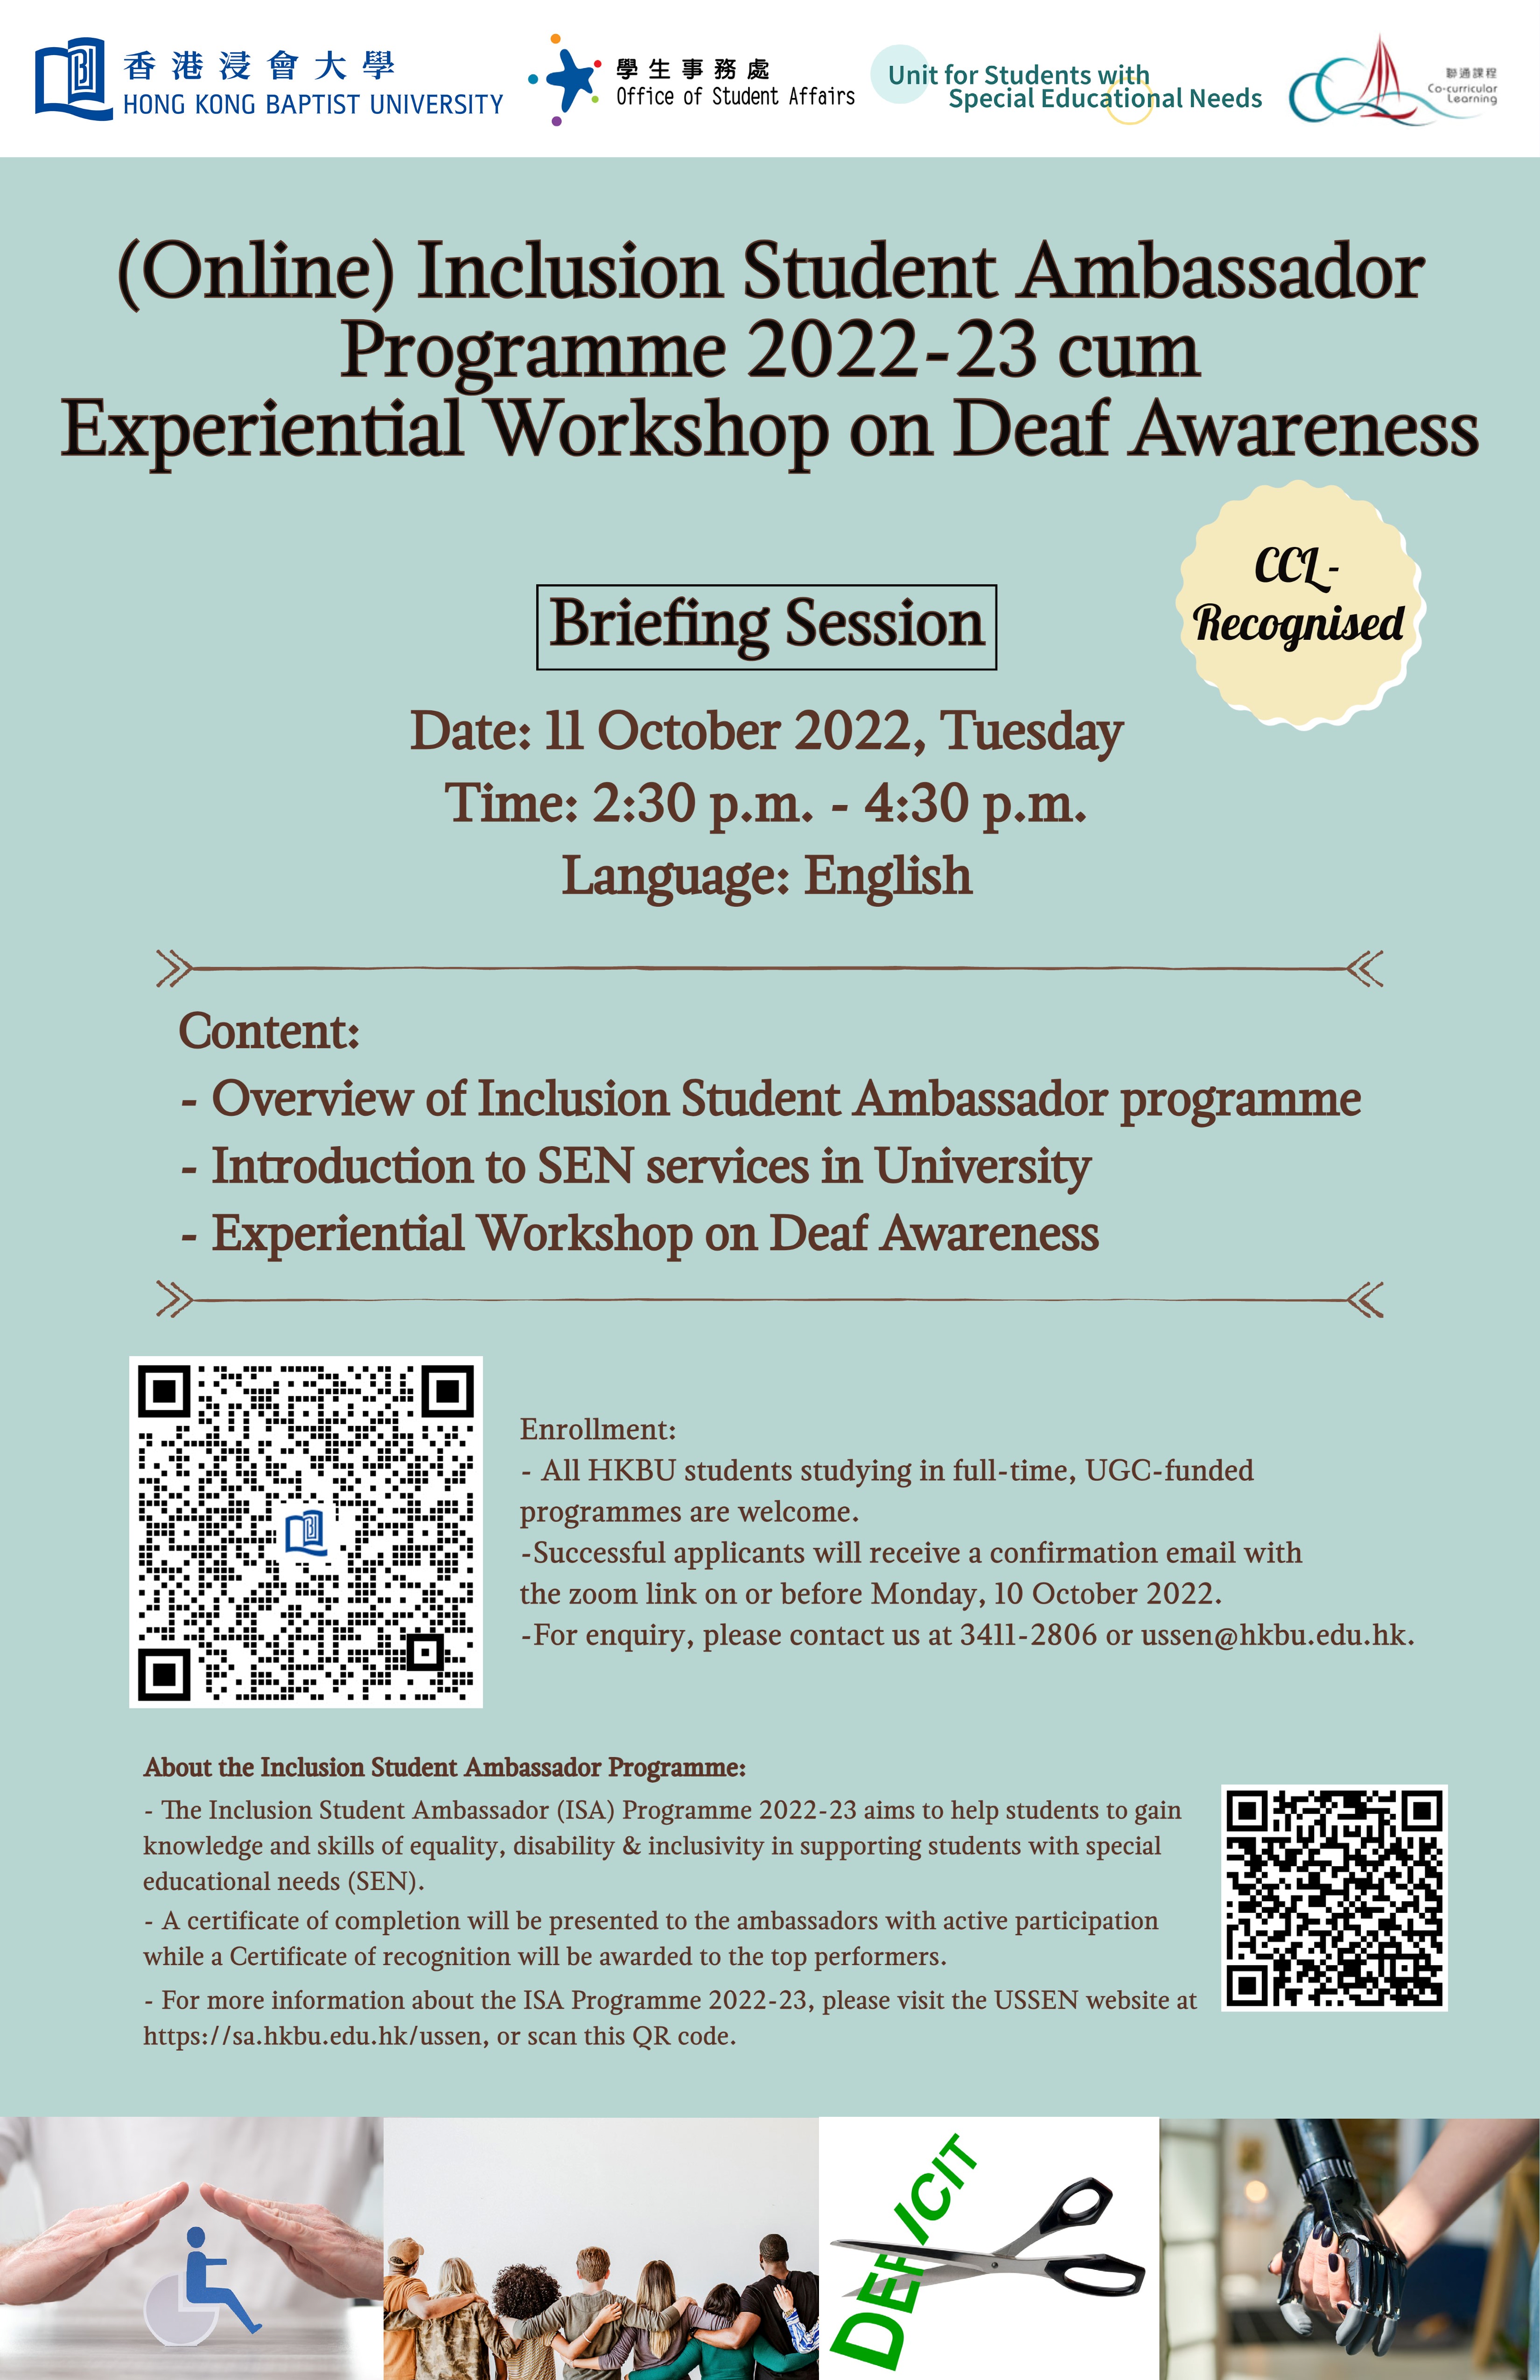 Inclusion Student Ambassadors 2022-23 cum Experiential Workshop on Deaf Awareness poster